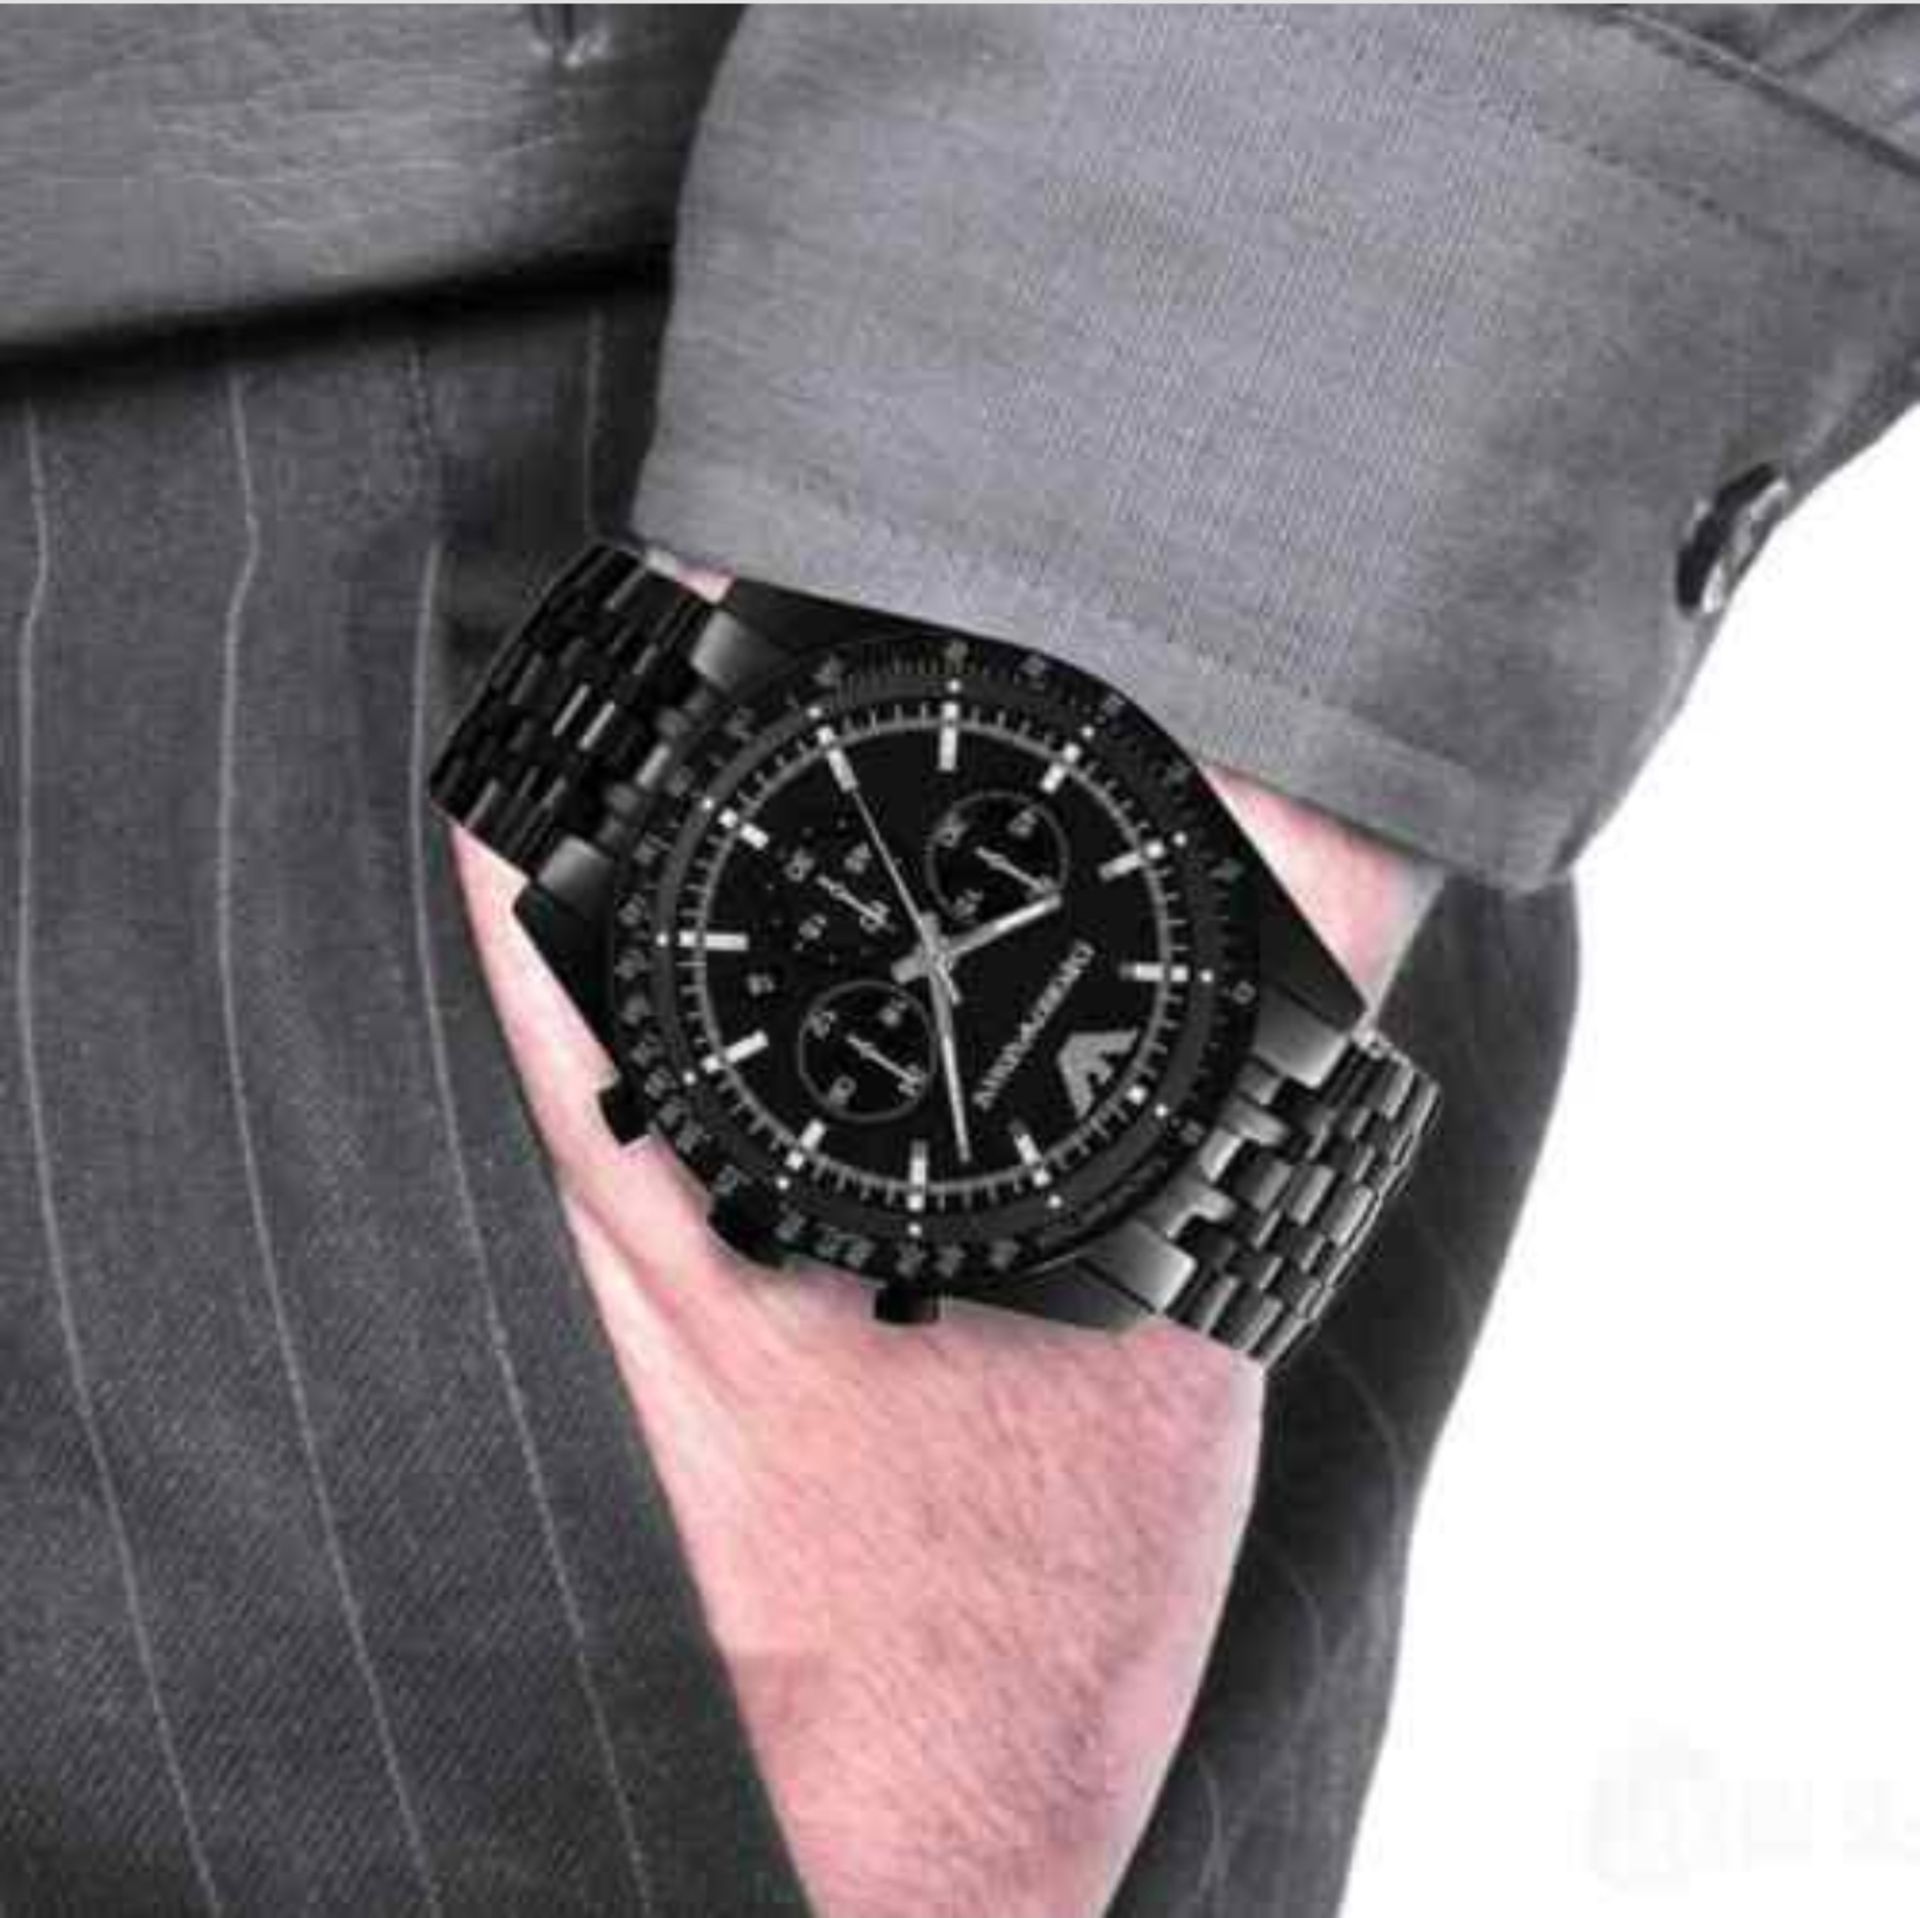 Emporio Armani AR5989 Men's Tazio Black Stainless Steel Bracelet Chronograph Watch - Image 9 of 9